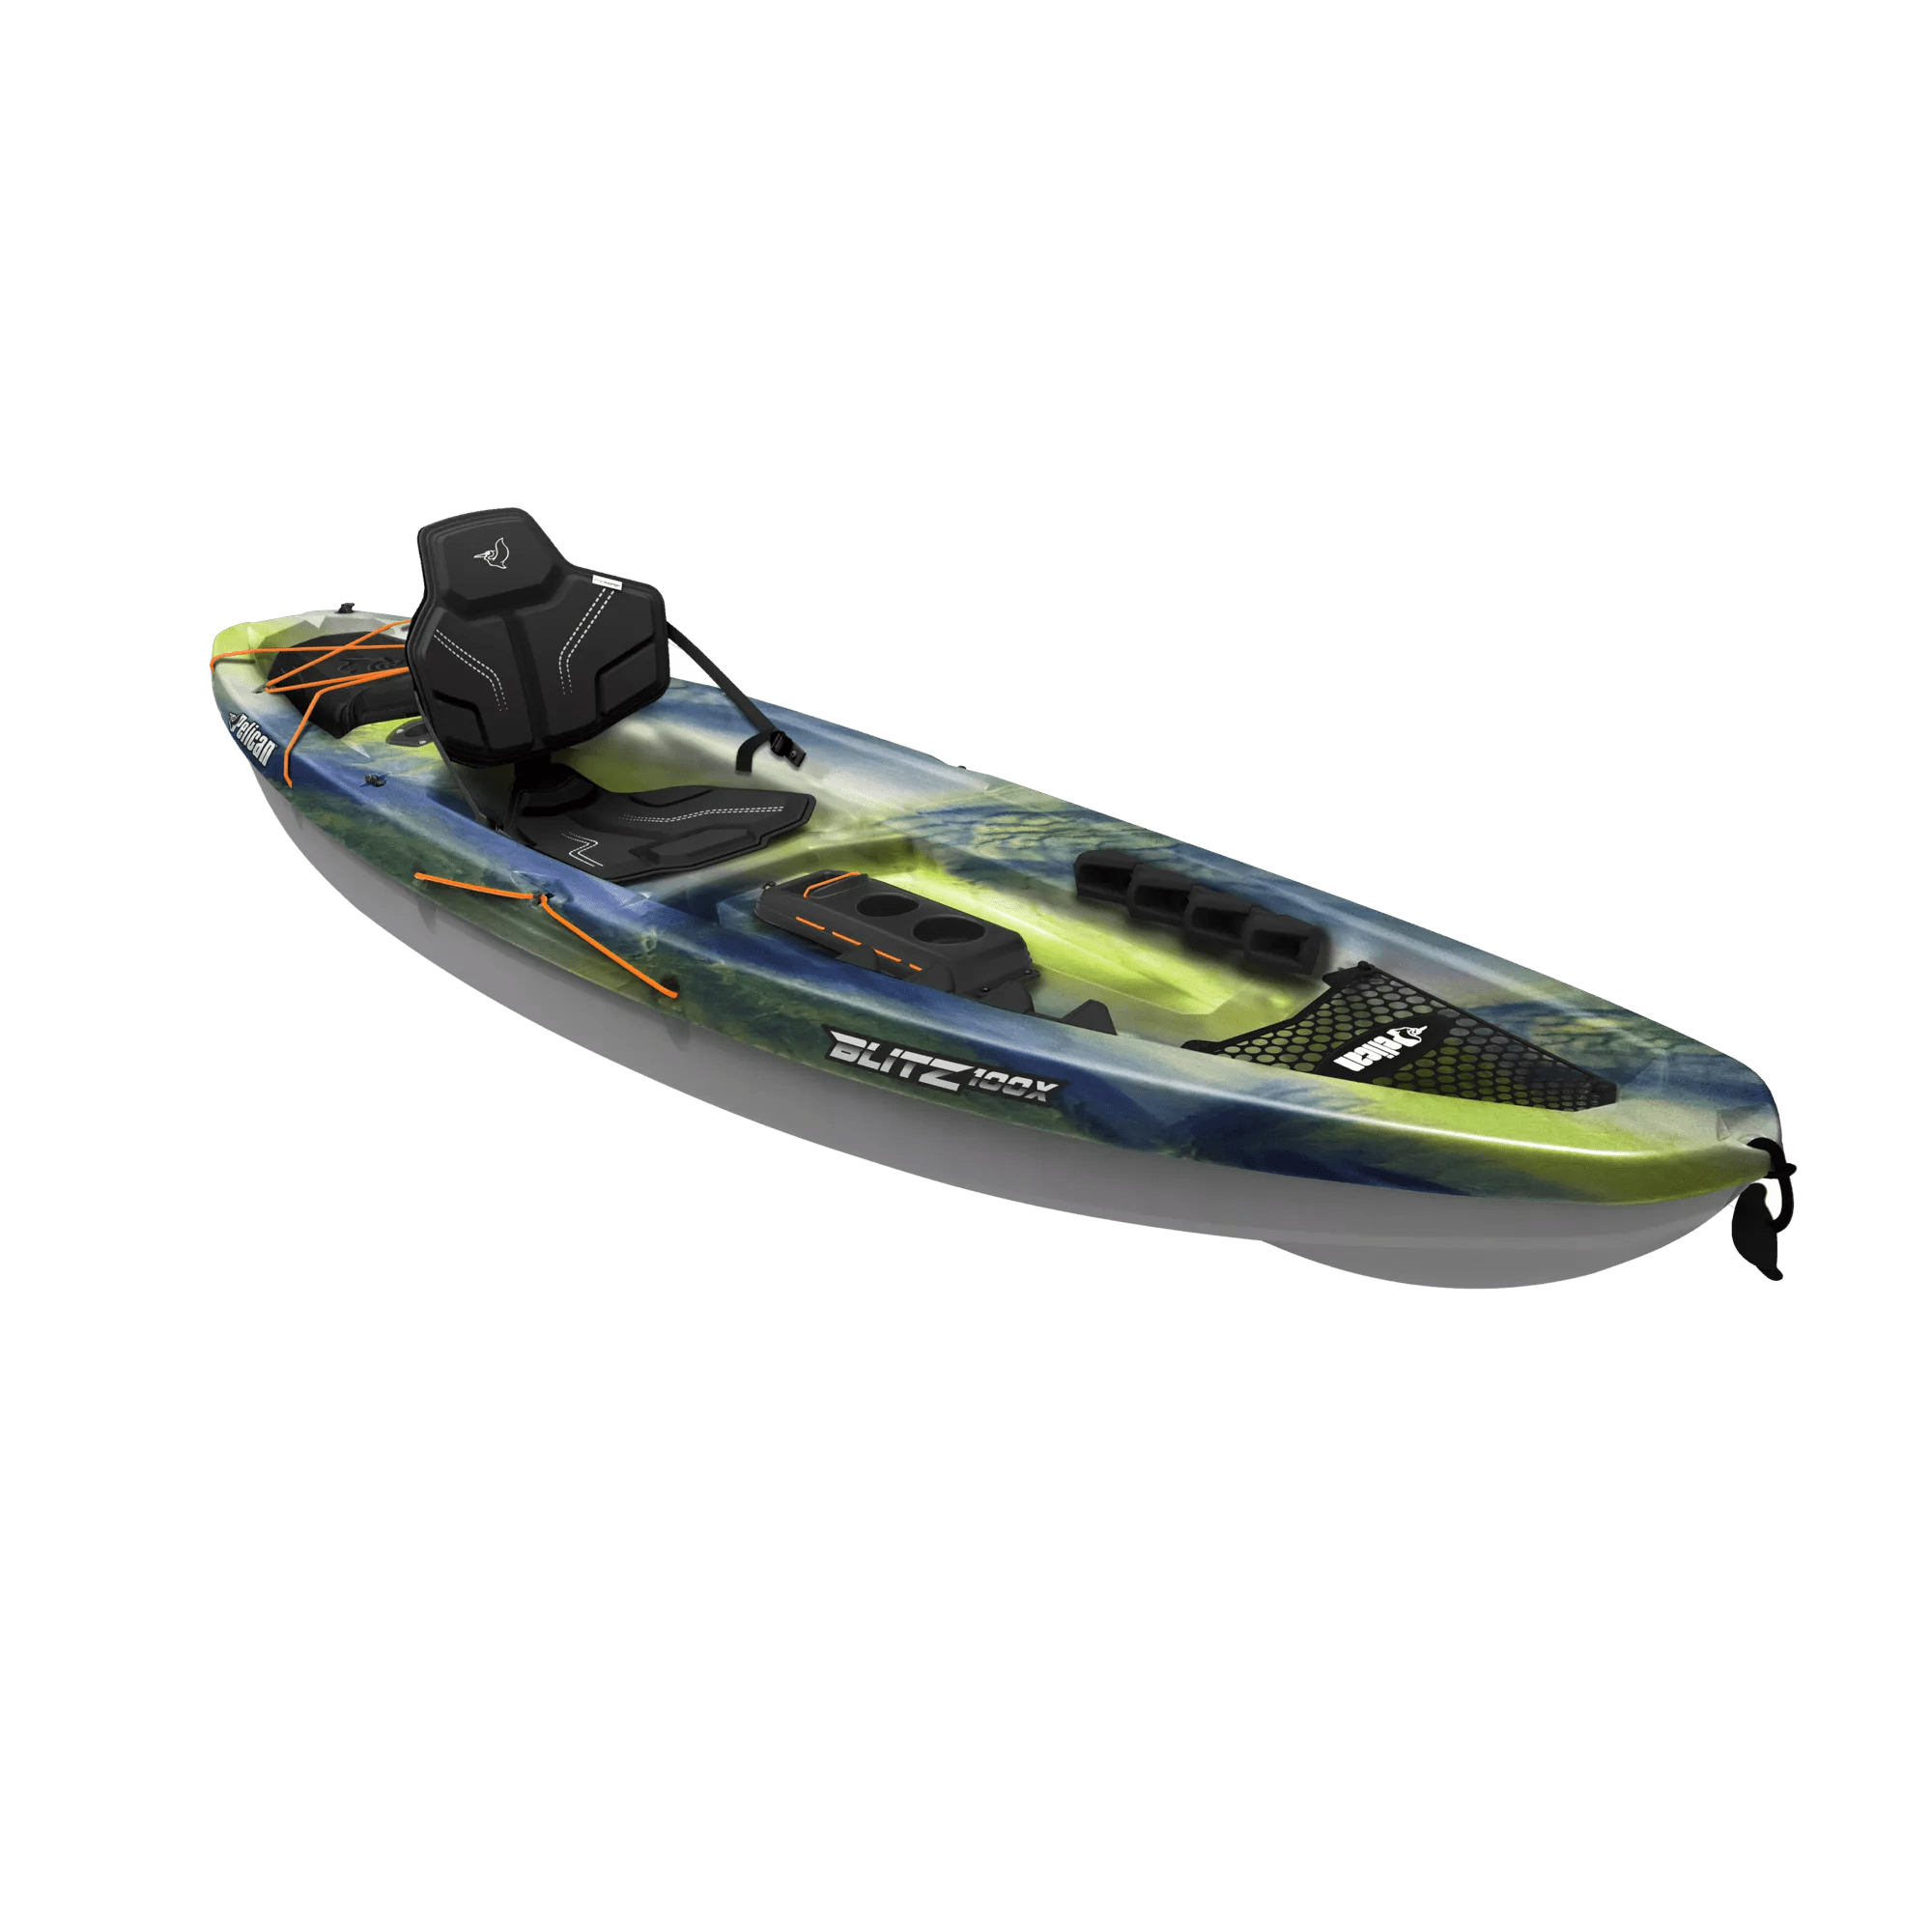 Modifying a $300 Pelican Castaway Kayak into a *Monster* Fishing Kayak! 